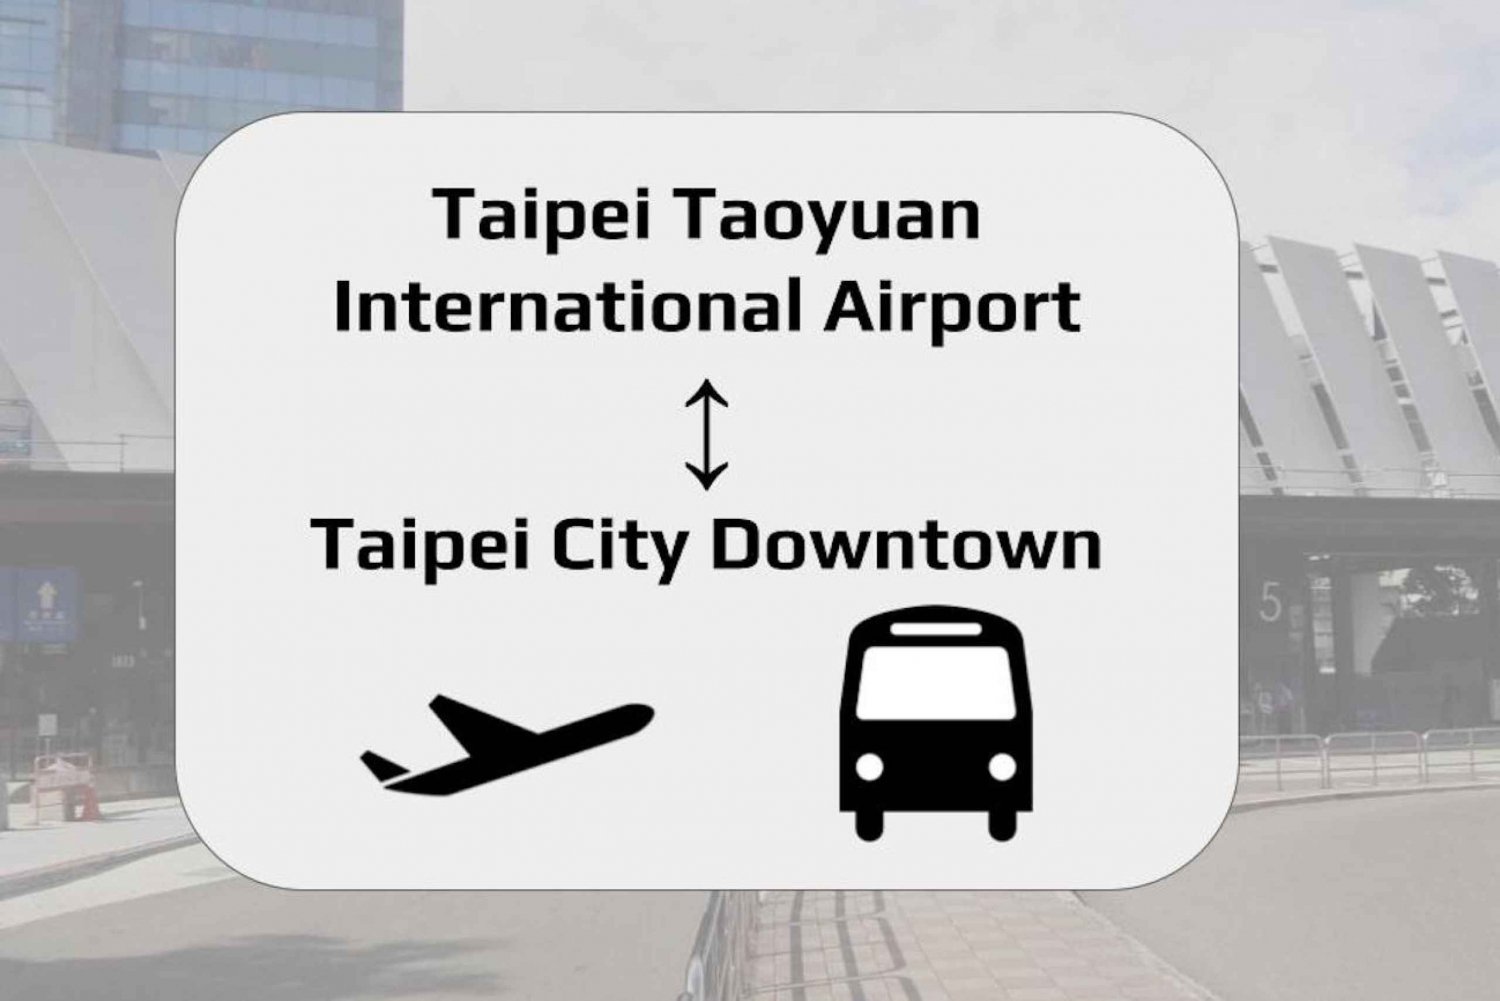 Taipei: Transfer autobusem powrotnym z lotniska Taoyuan (TPE).